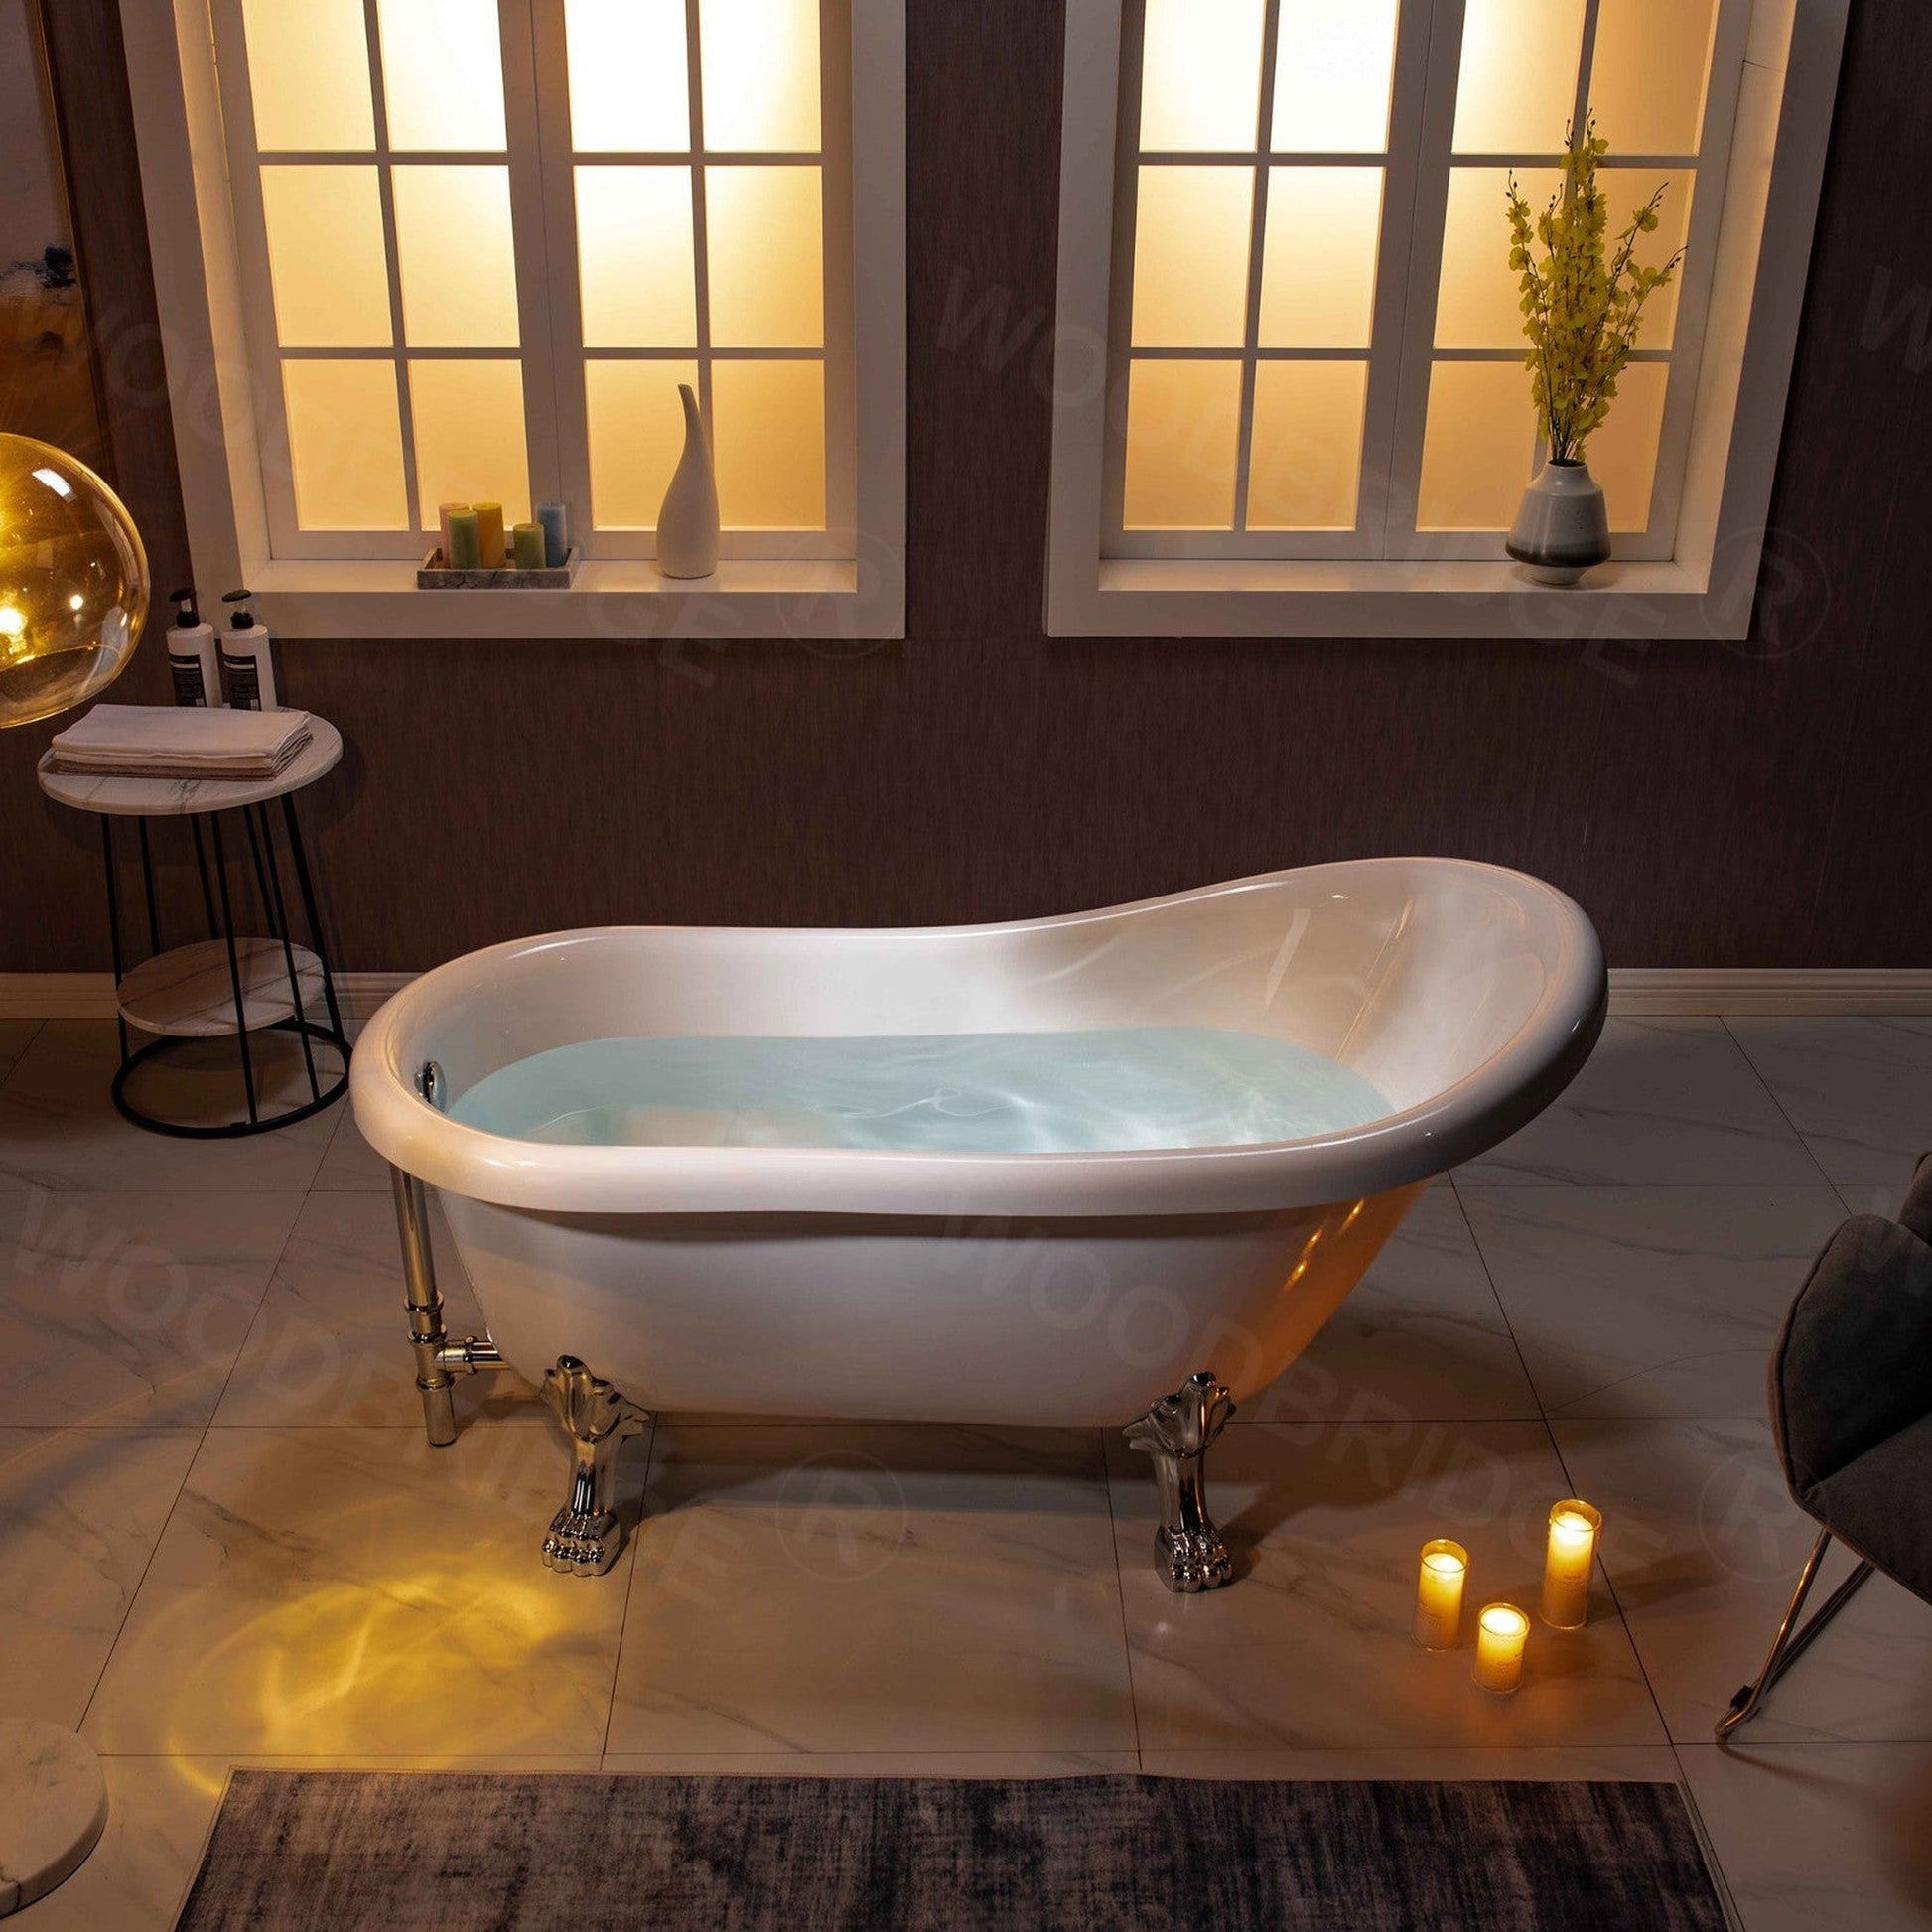 WoodBridge 59" White Acrylic Slipper Clawfoot Bath Tub With Chrome Feet, Drain, Overflow, F0071CHVT Tub Filler and Caddy Tray